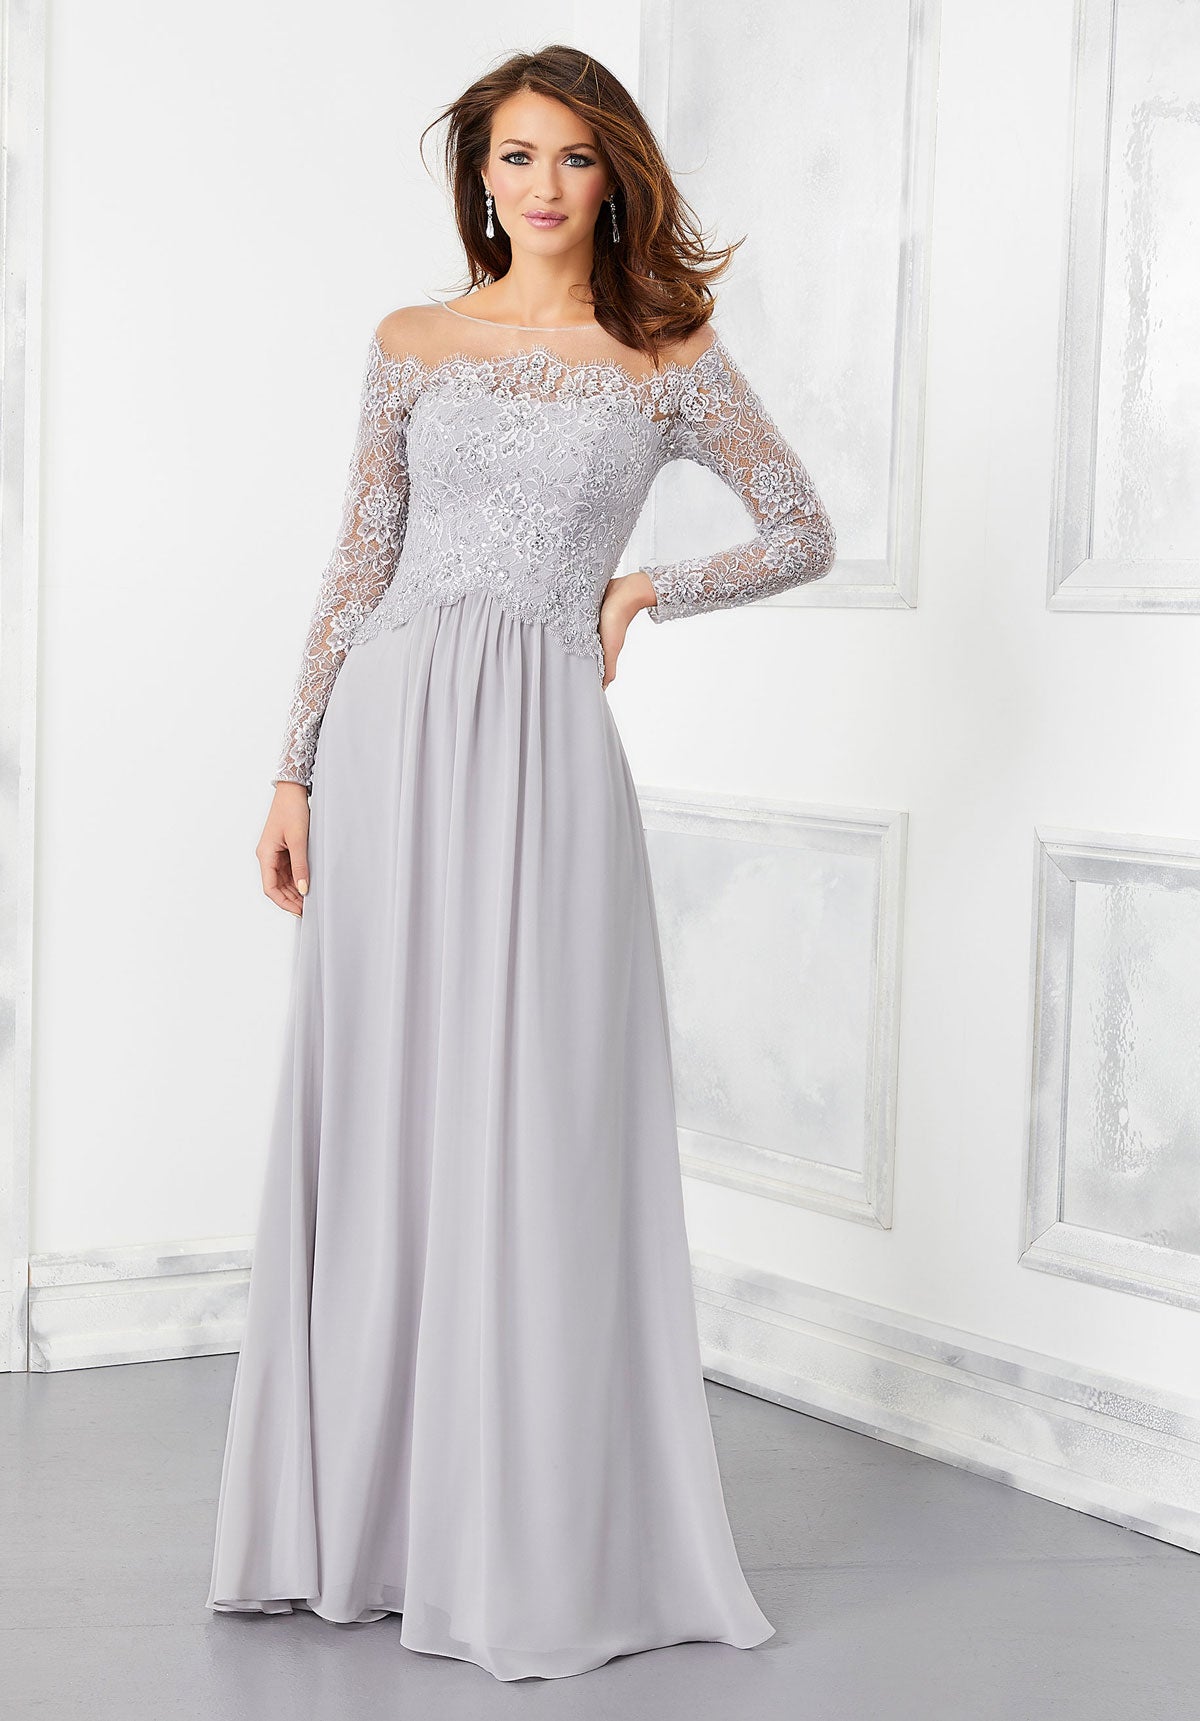 MGNY - 72310 - Cheron's Bridal, Mother/Party Dress